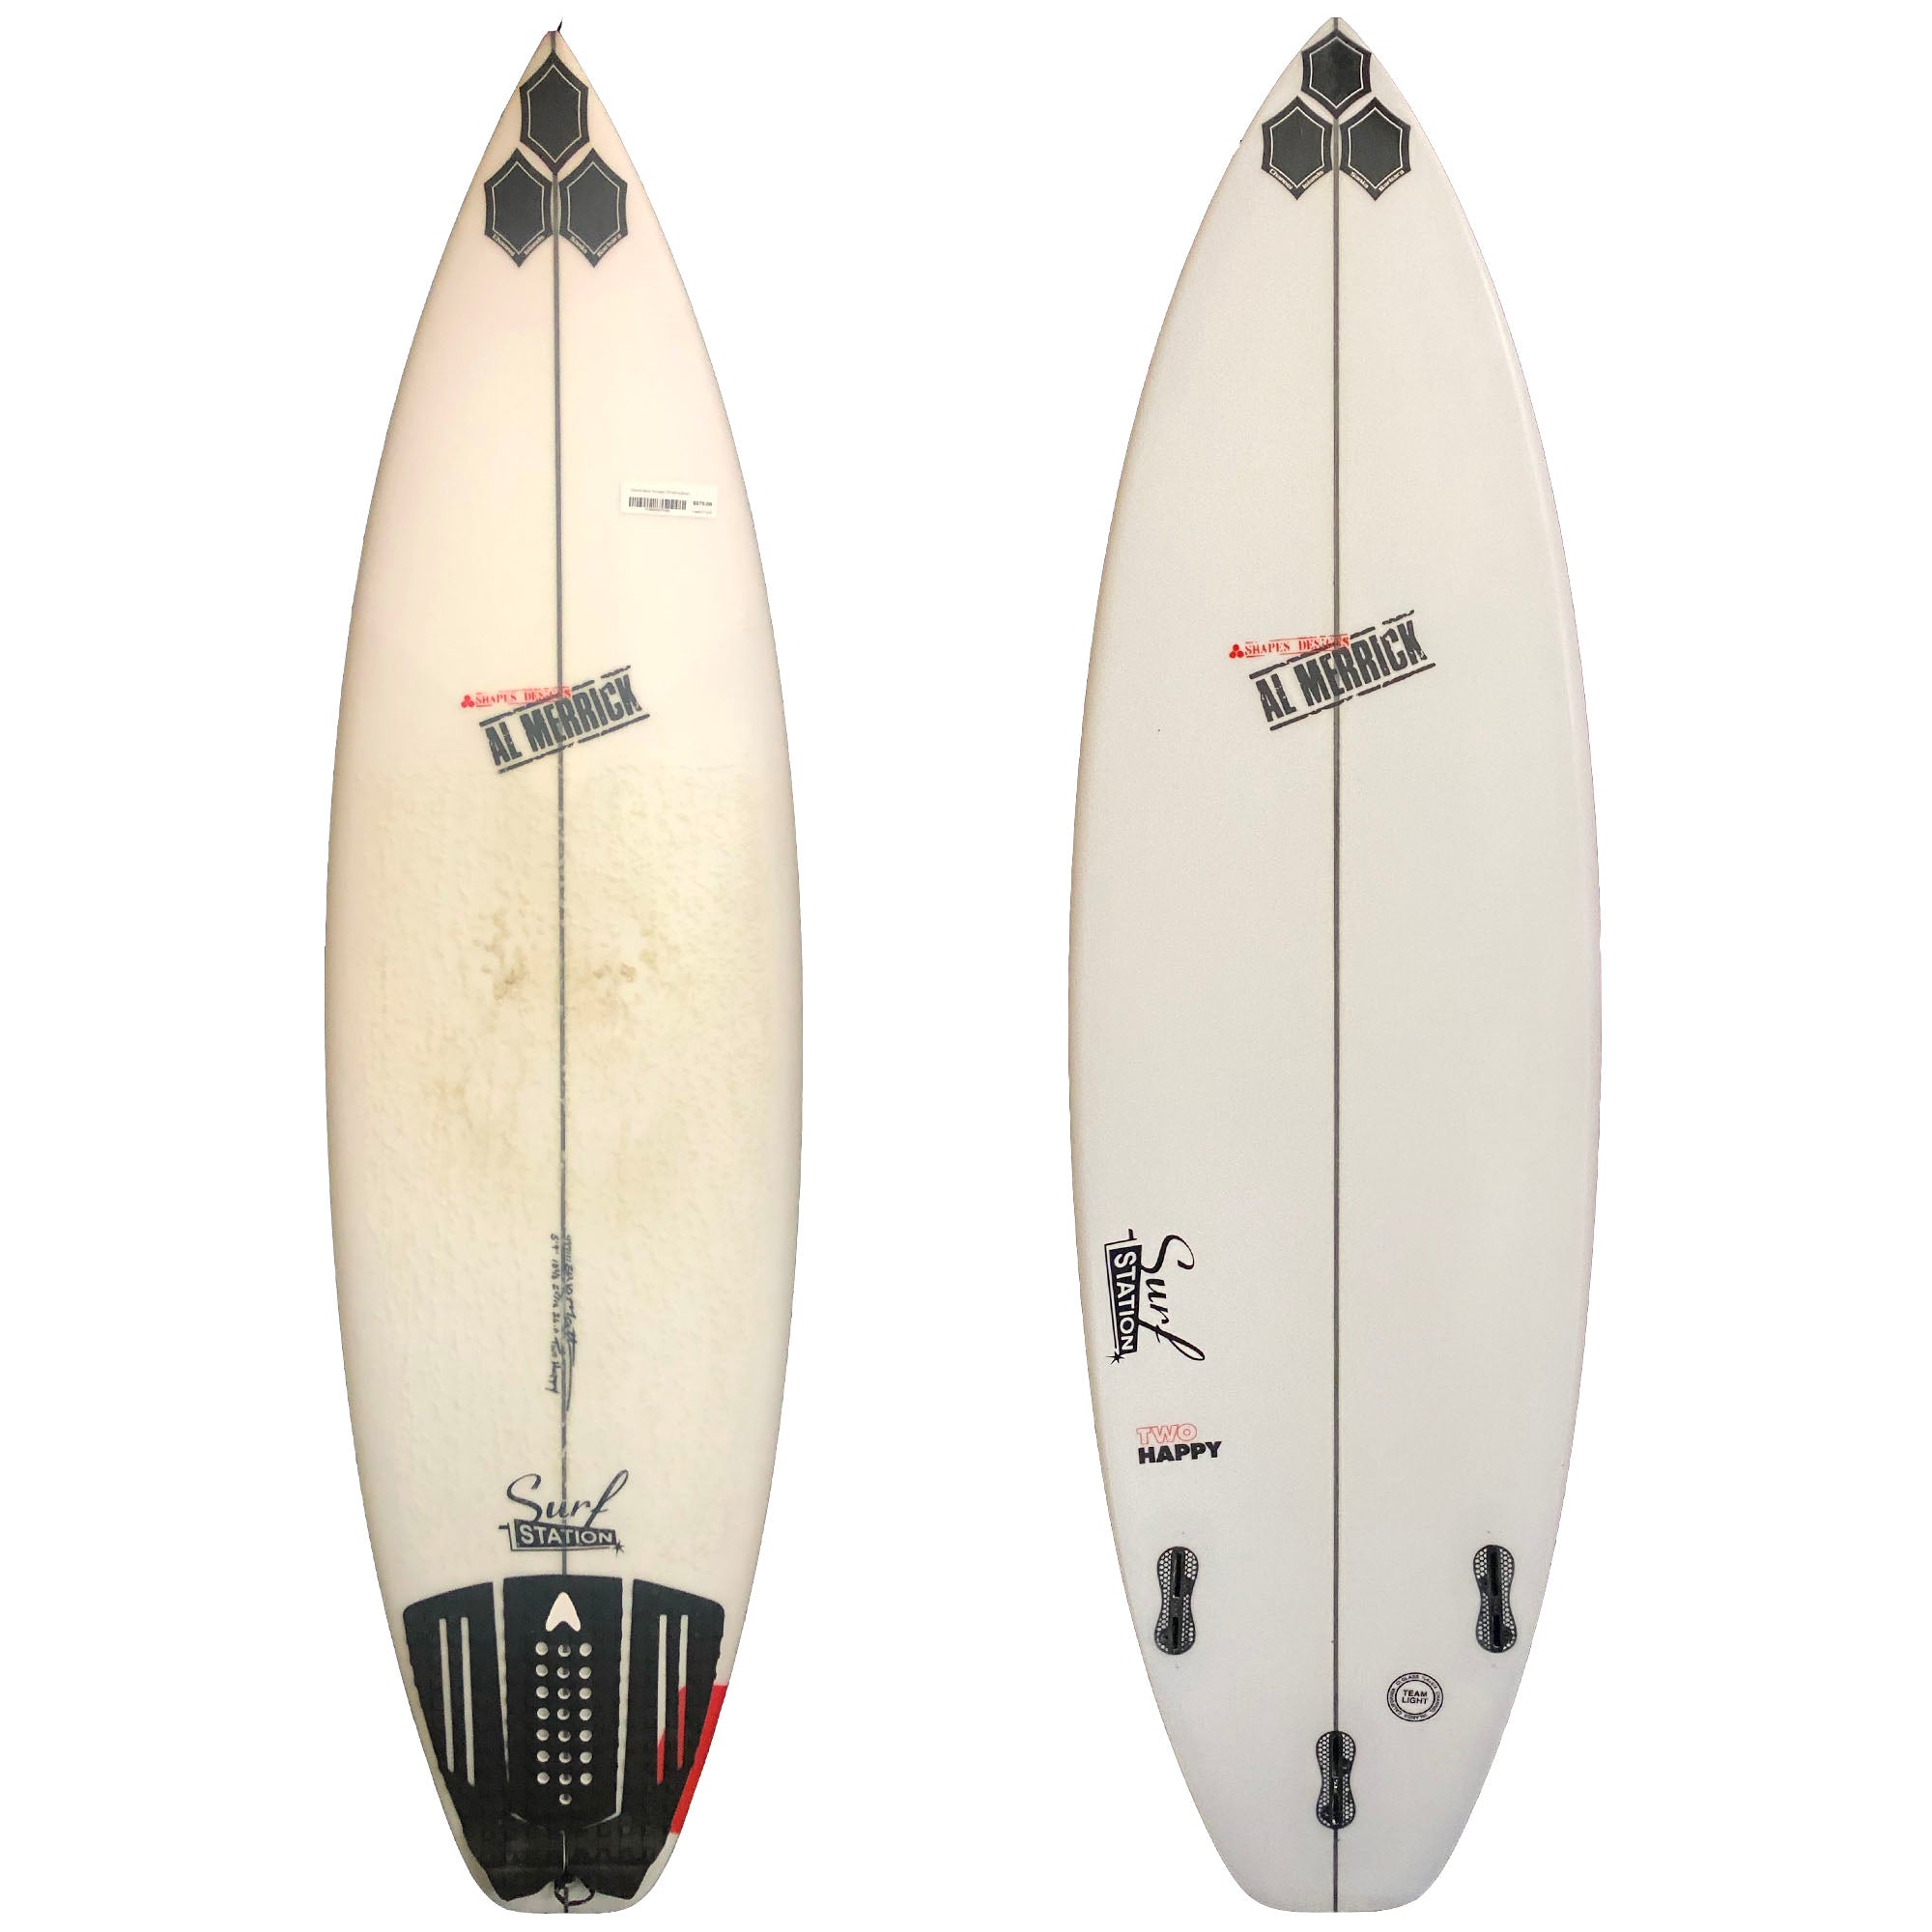 Channel Islands Two Happy 5'9 Used Surfboard